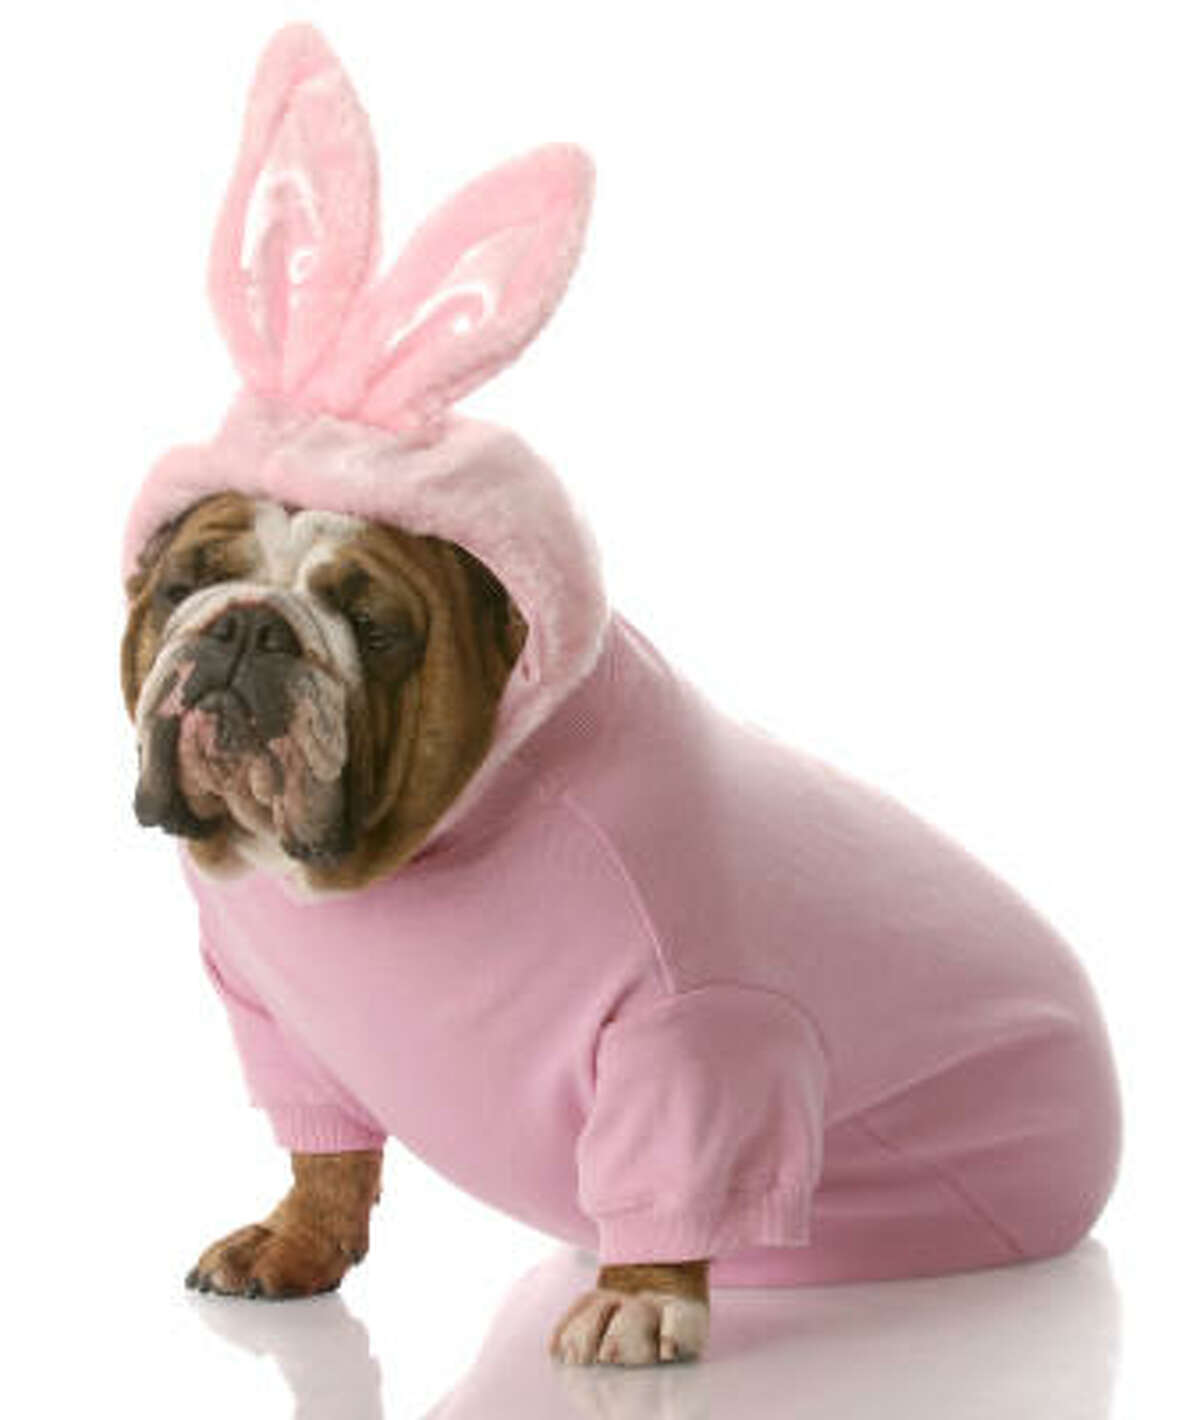 An English bulldog sports a pink bunny costume for Halloween.